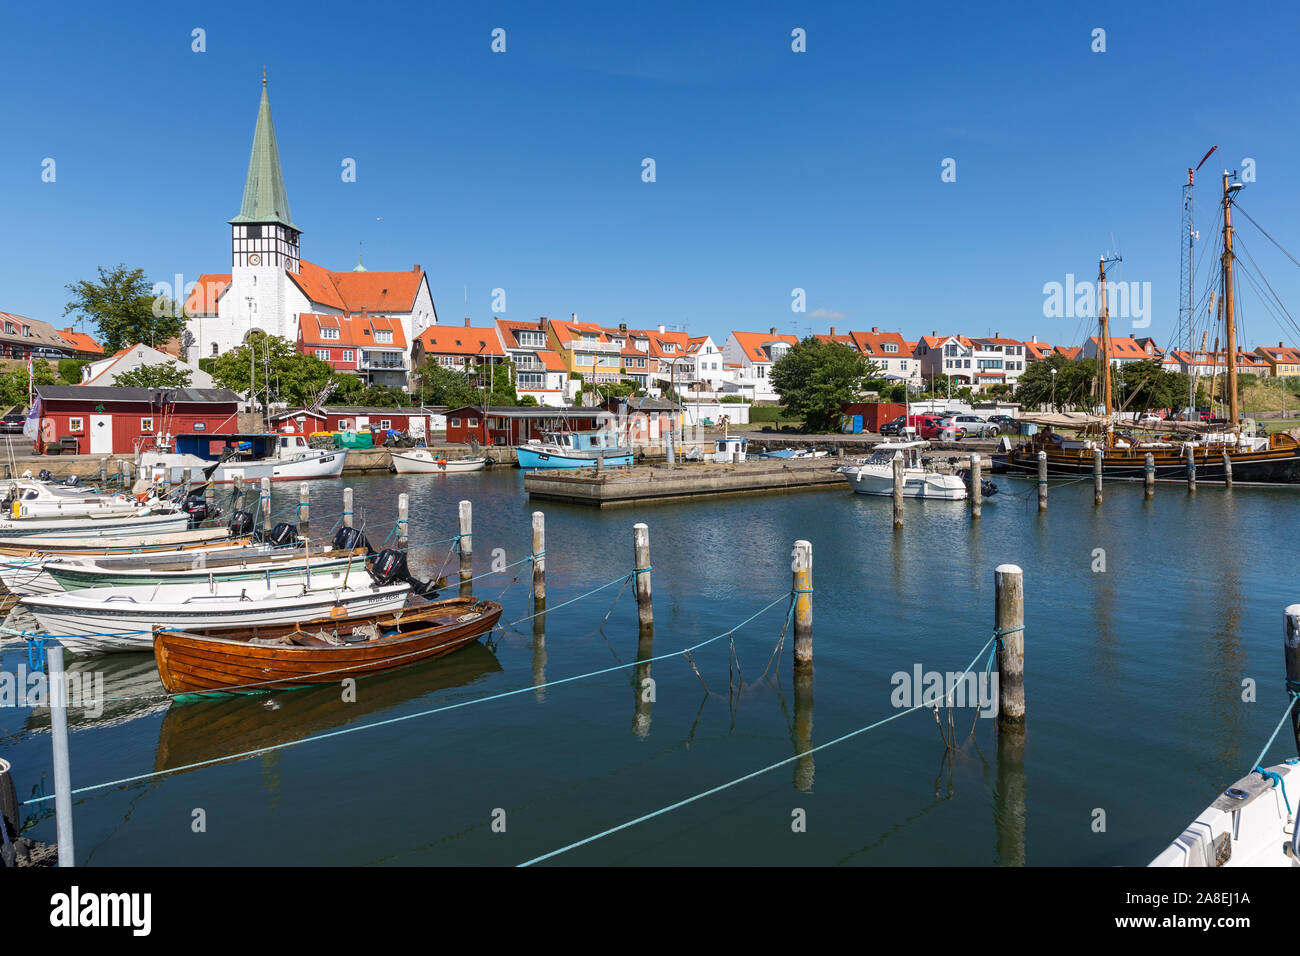 Rønne; Bornholm, Hafen, Boote, Segelschiff, Wohnhaeuser, Nikolai Kirche Stock Photo